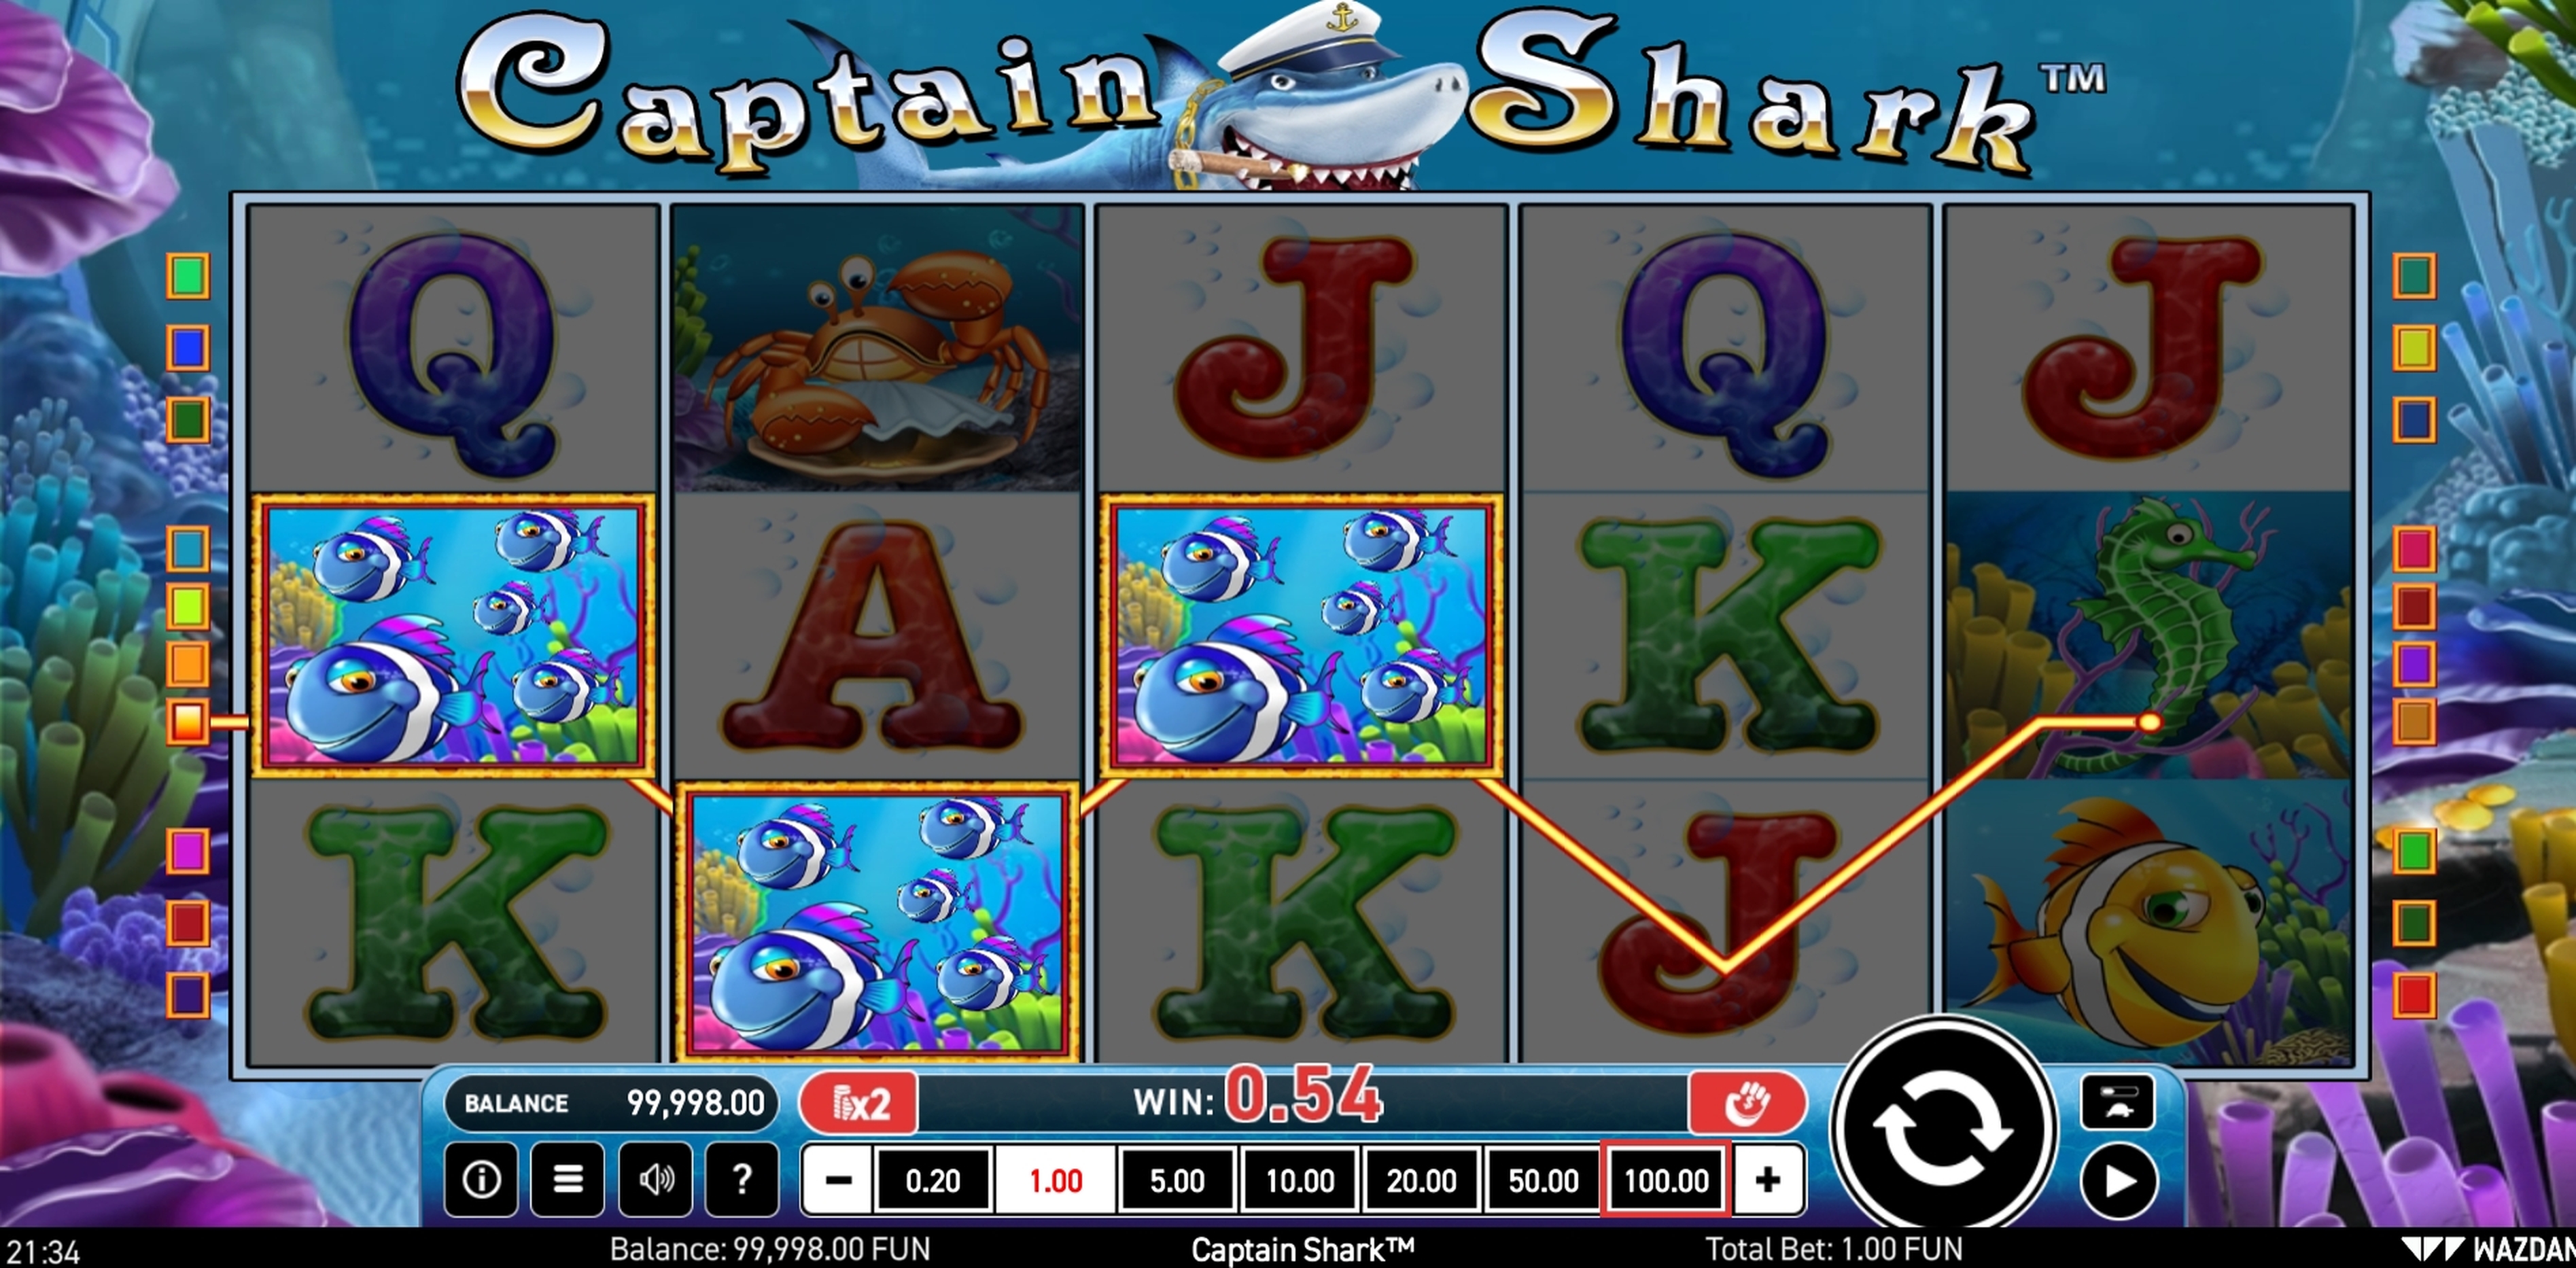 Win Money in Captain Shark Free Slot Game by Wazdan